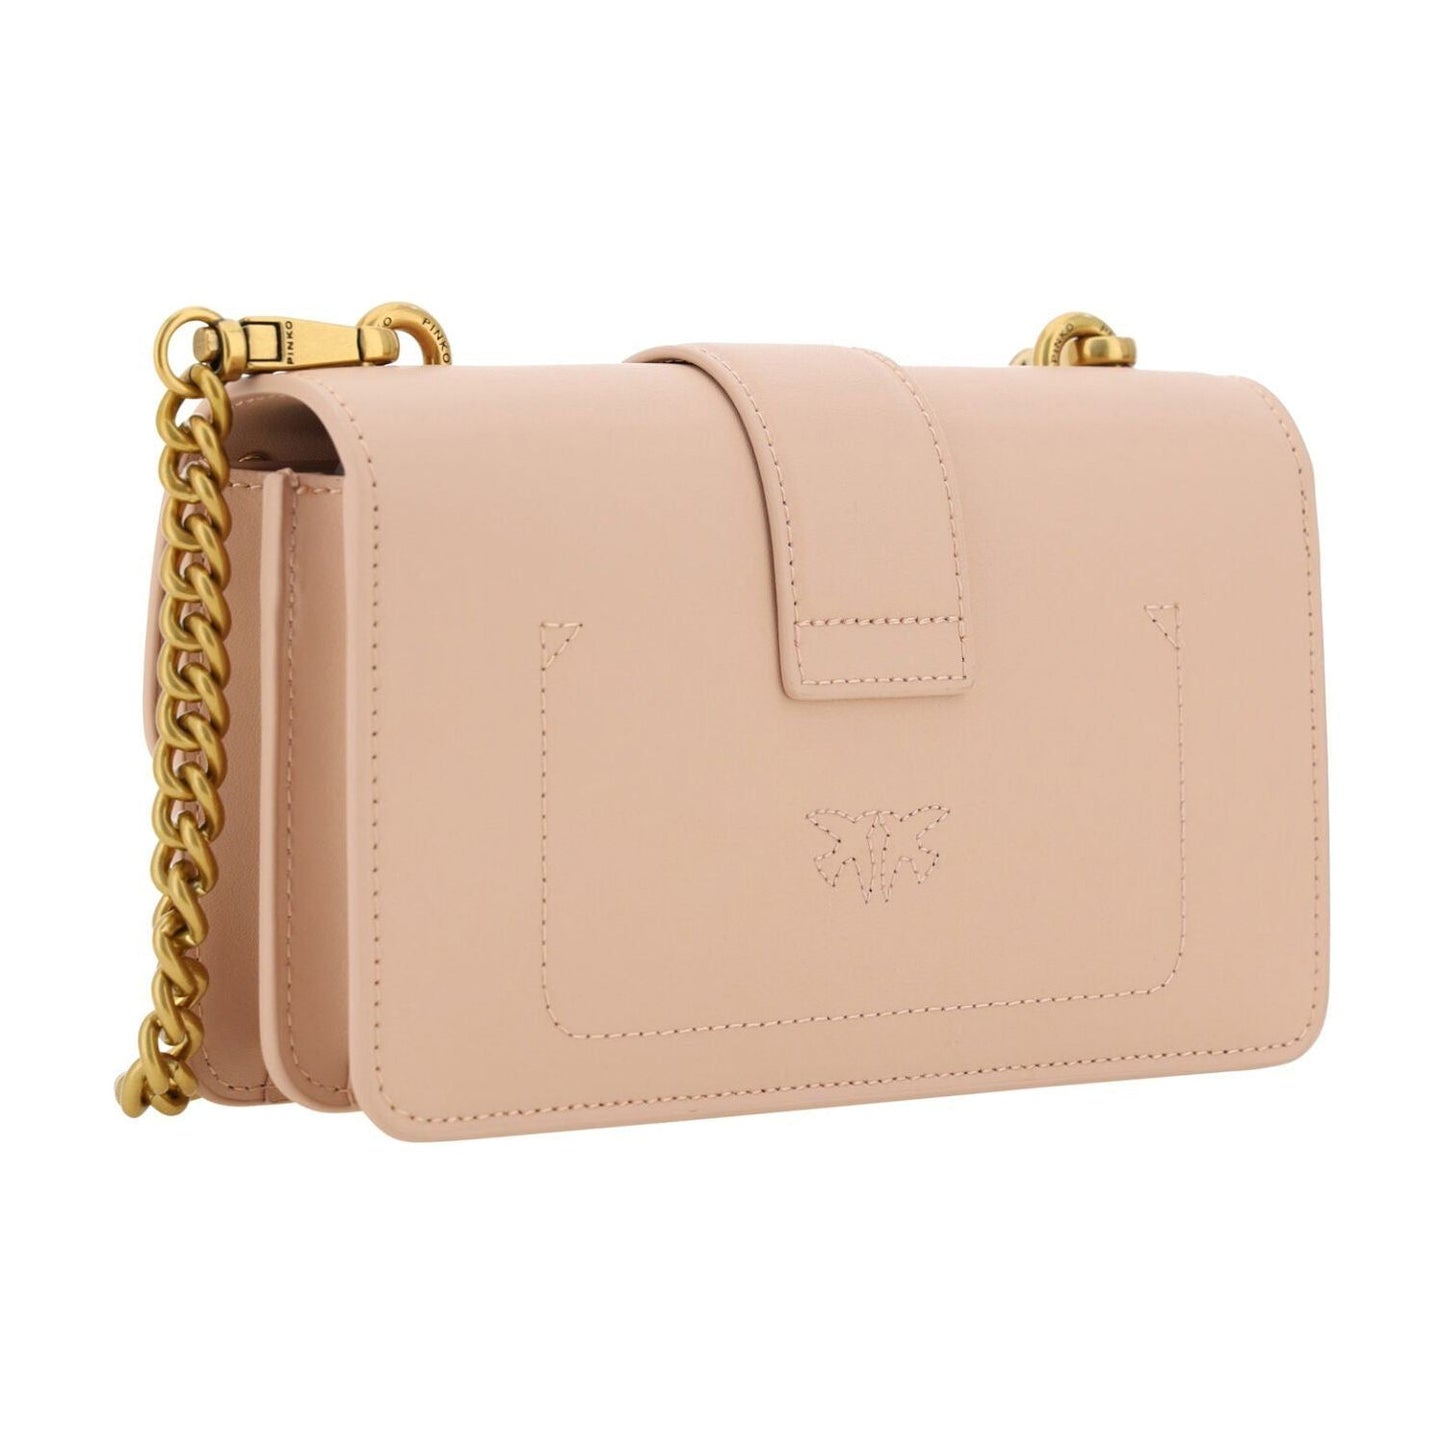 PINKO Chic Pink Cipria Mini Love Shoulder Bag pink-leather-mini-love-one-shoulder-bag ED4C7B32-E758-4D58-8E93-828E8A575CD2-scaled-ea4a814d-8b5.jpg